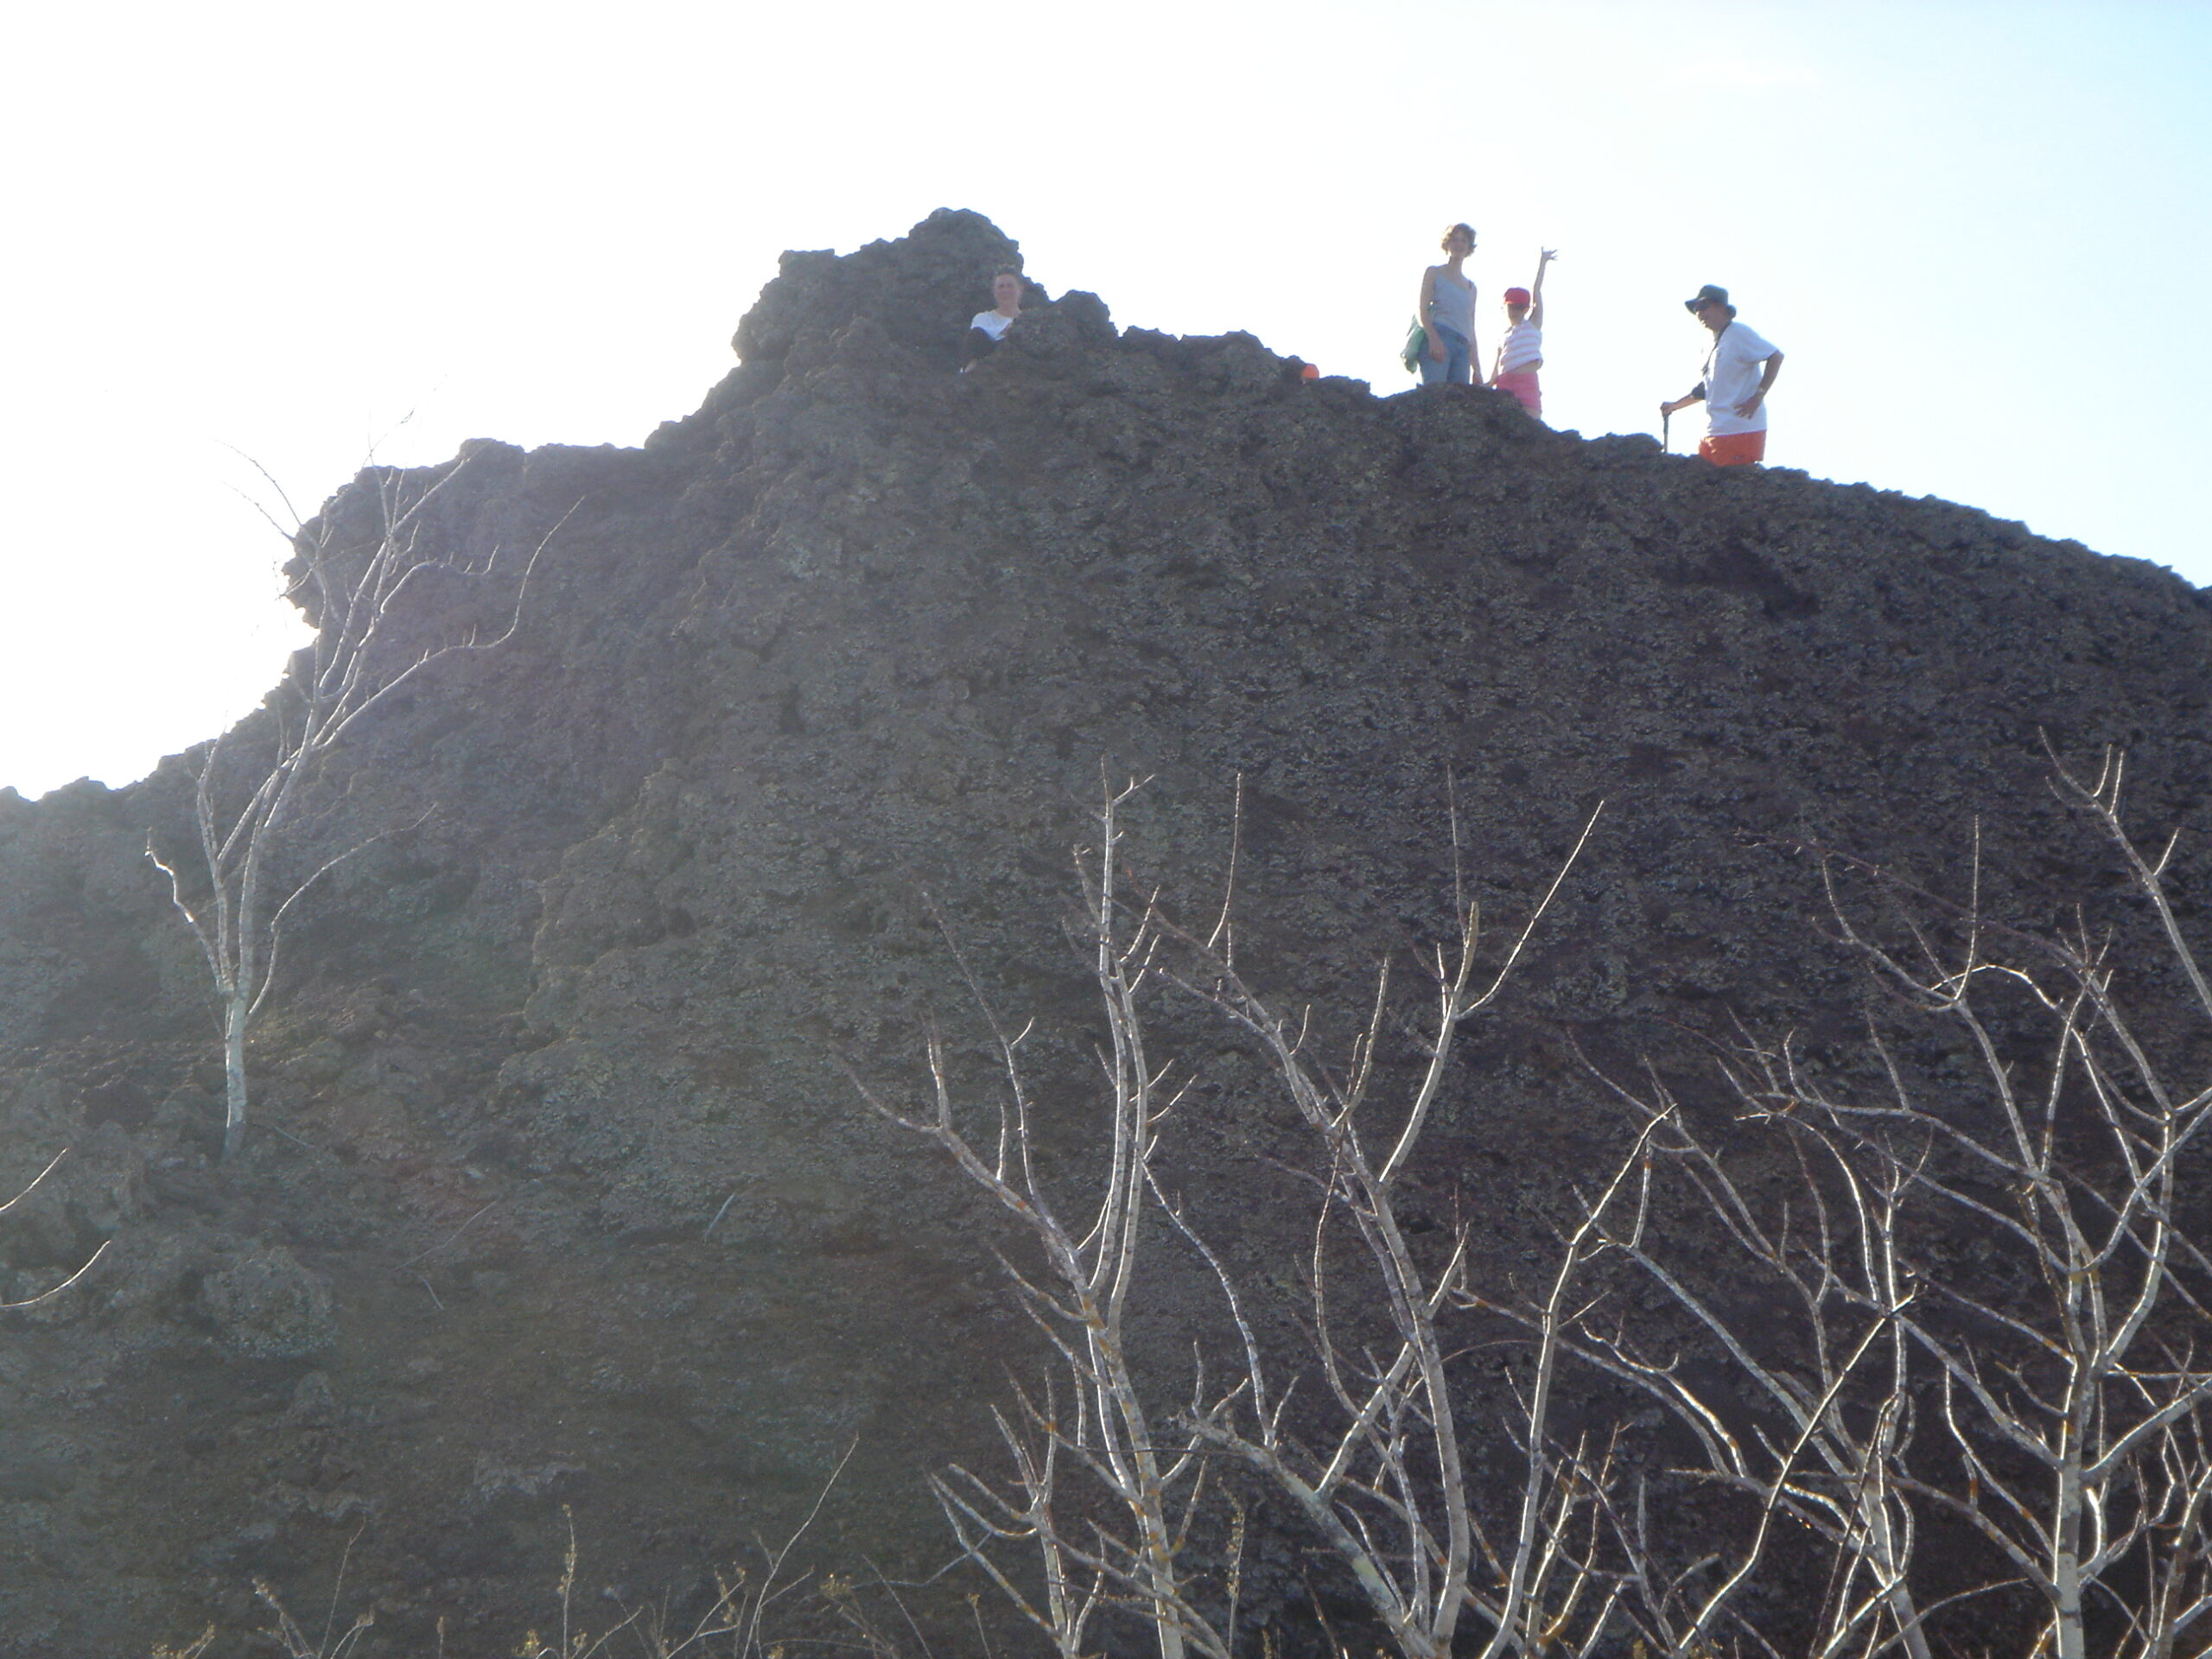 Lee, Laura, Dick atop Isabela Island volcano